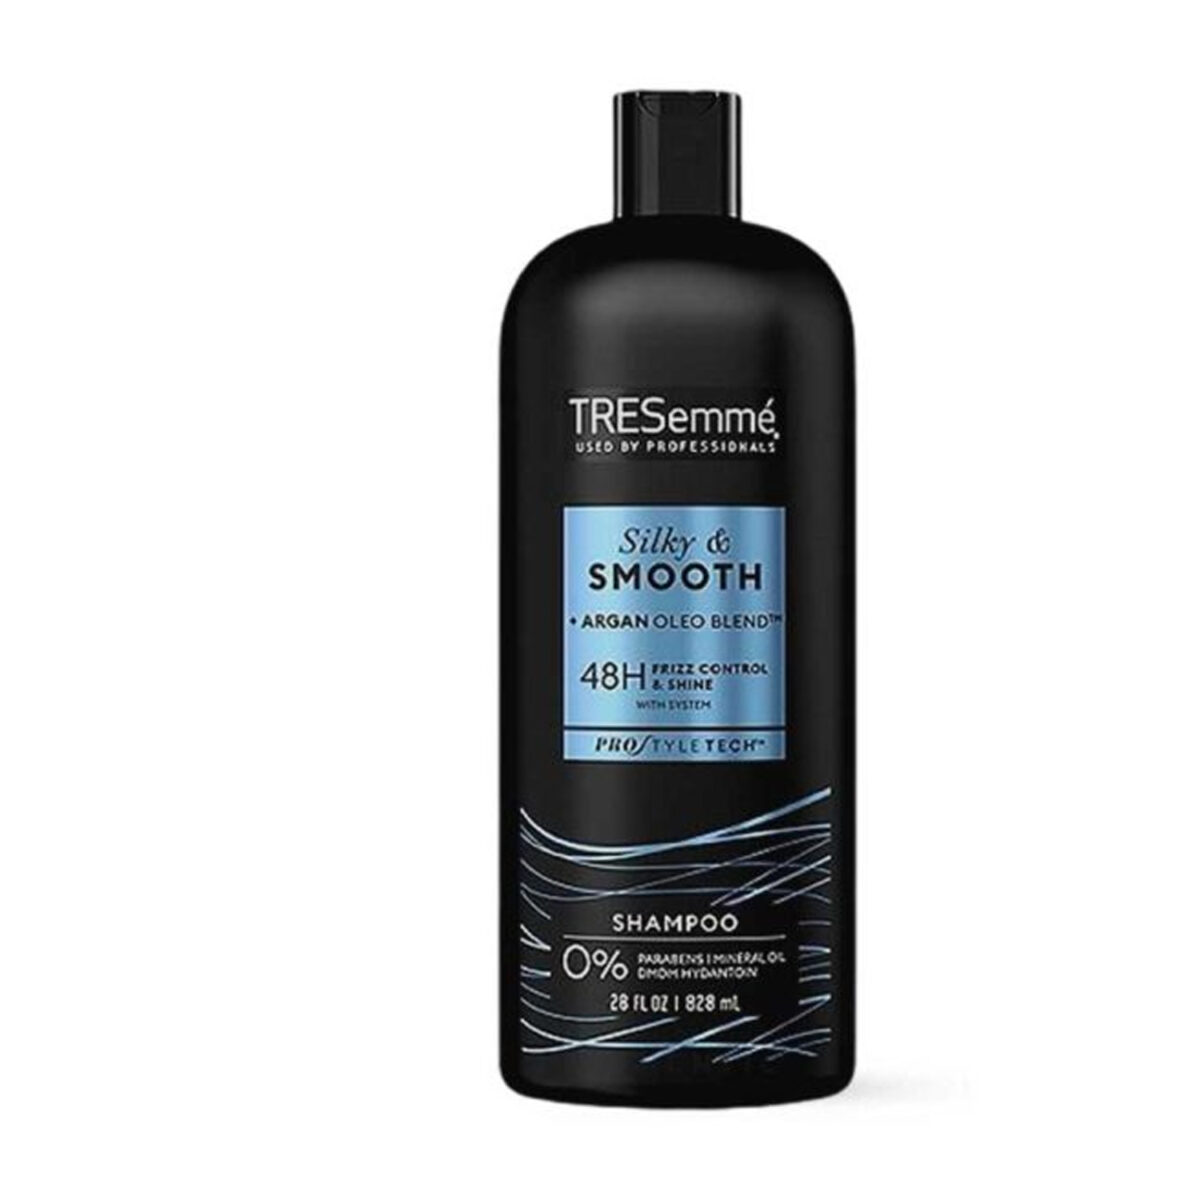 Tresemme Silky & Smooth + Argan Oleo Blend Shampoo (828ml)